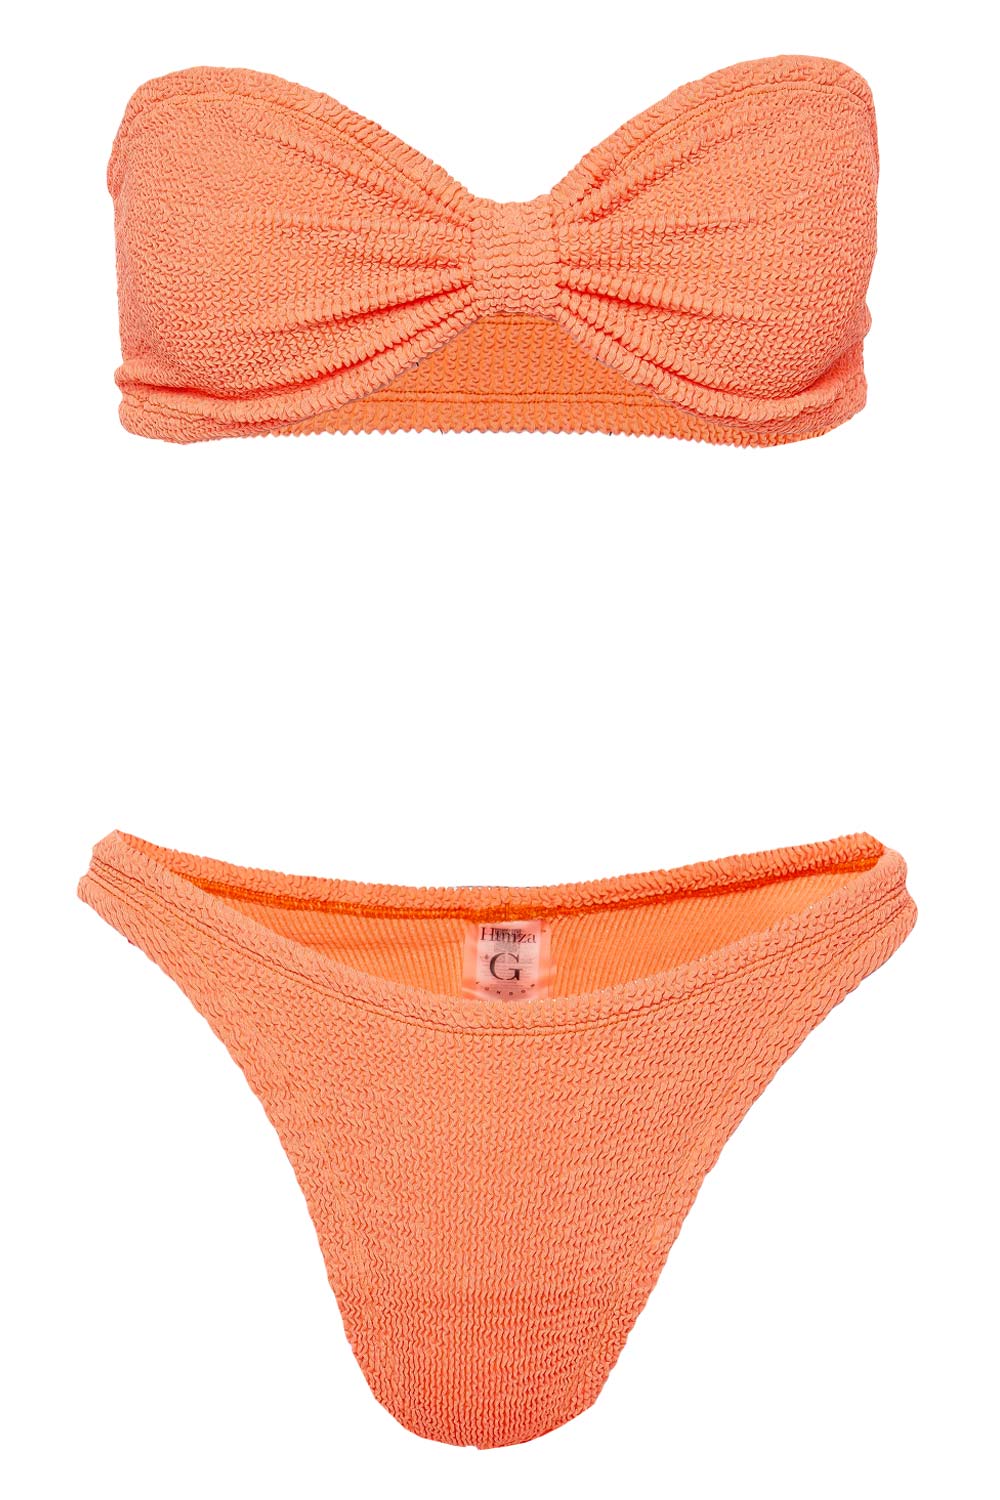 Hunza G Jean Orange Crinkle Bikini